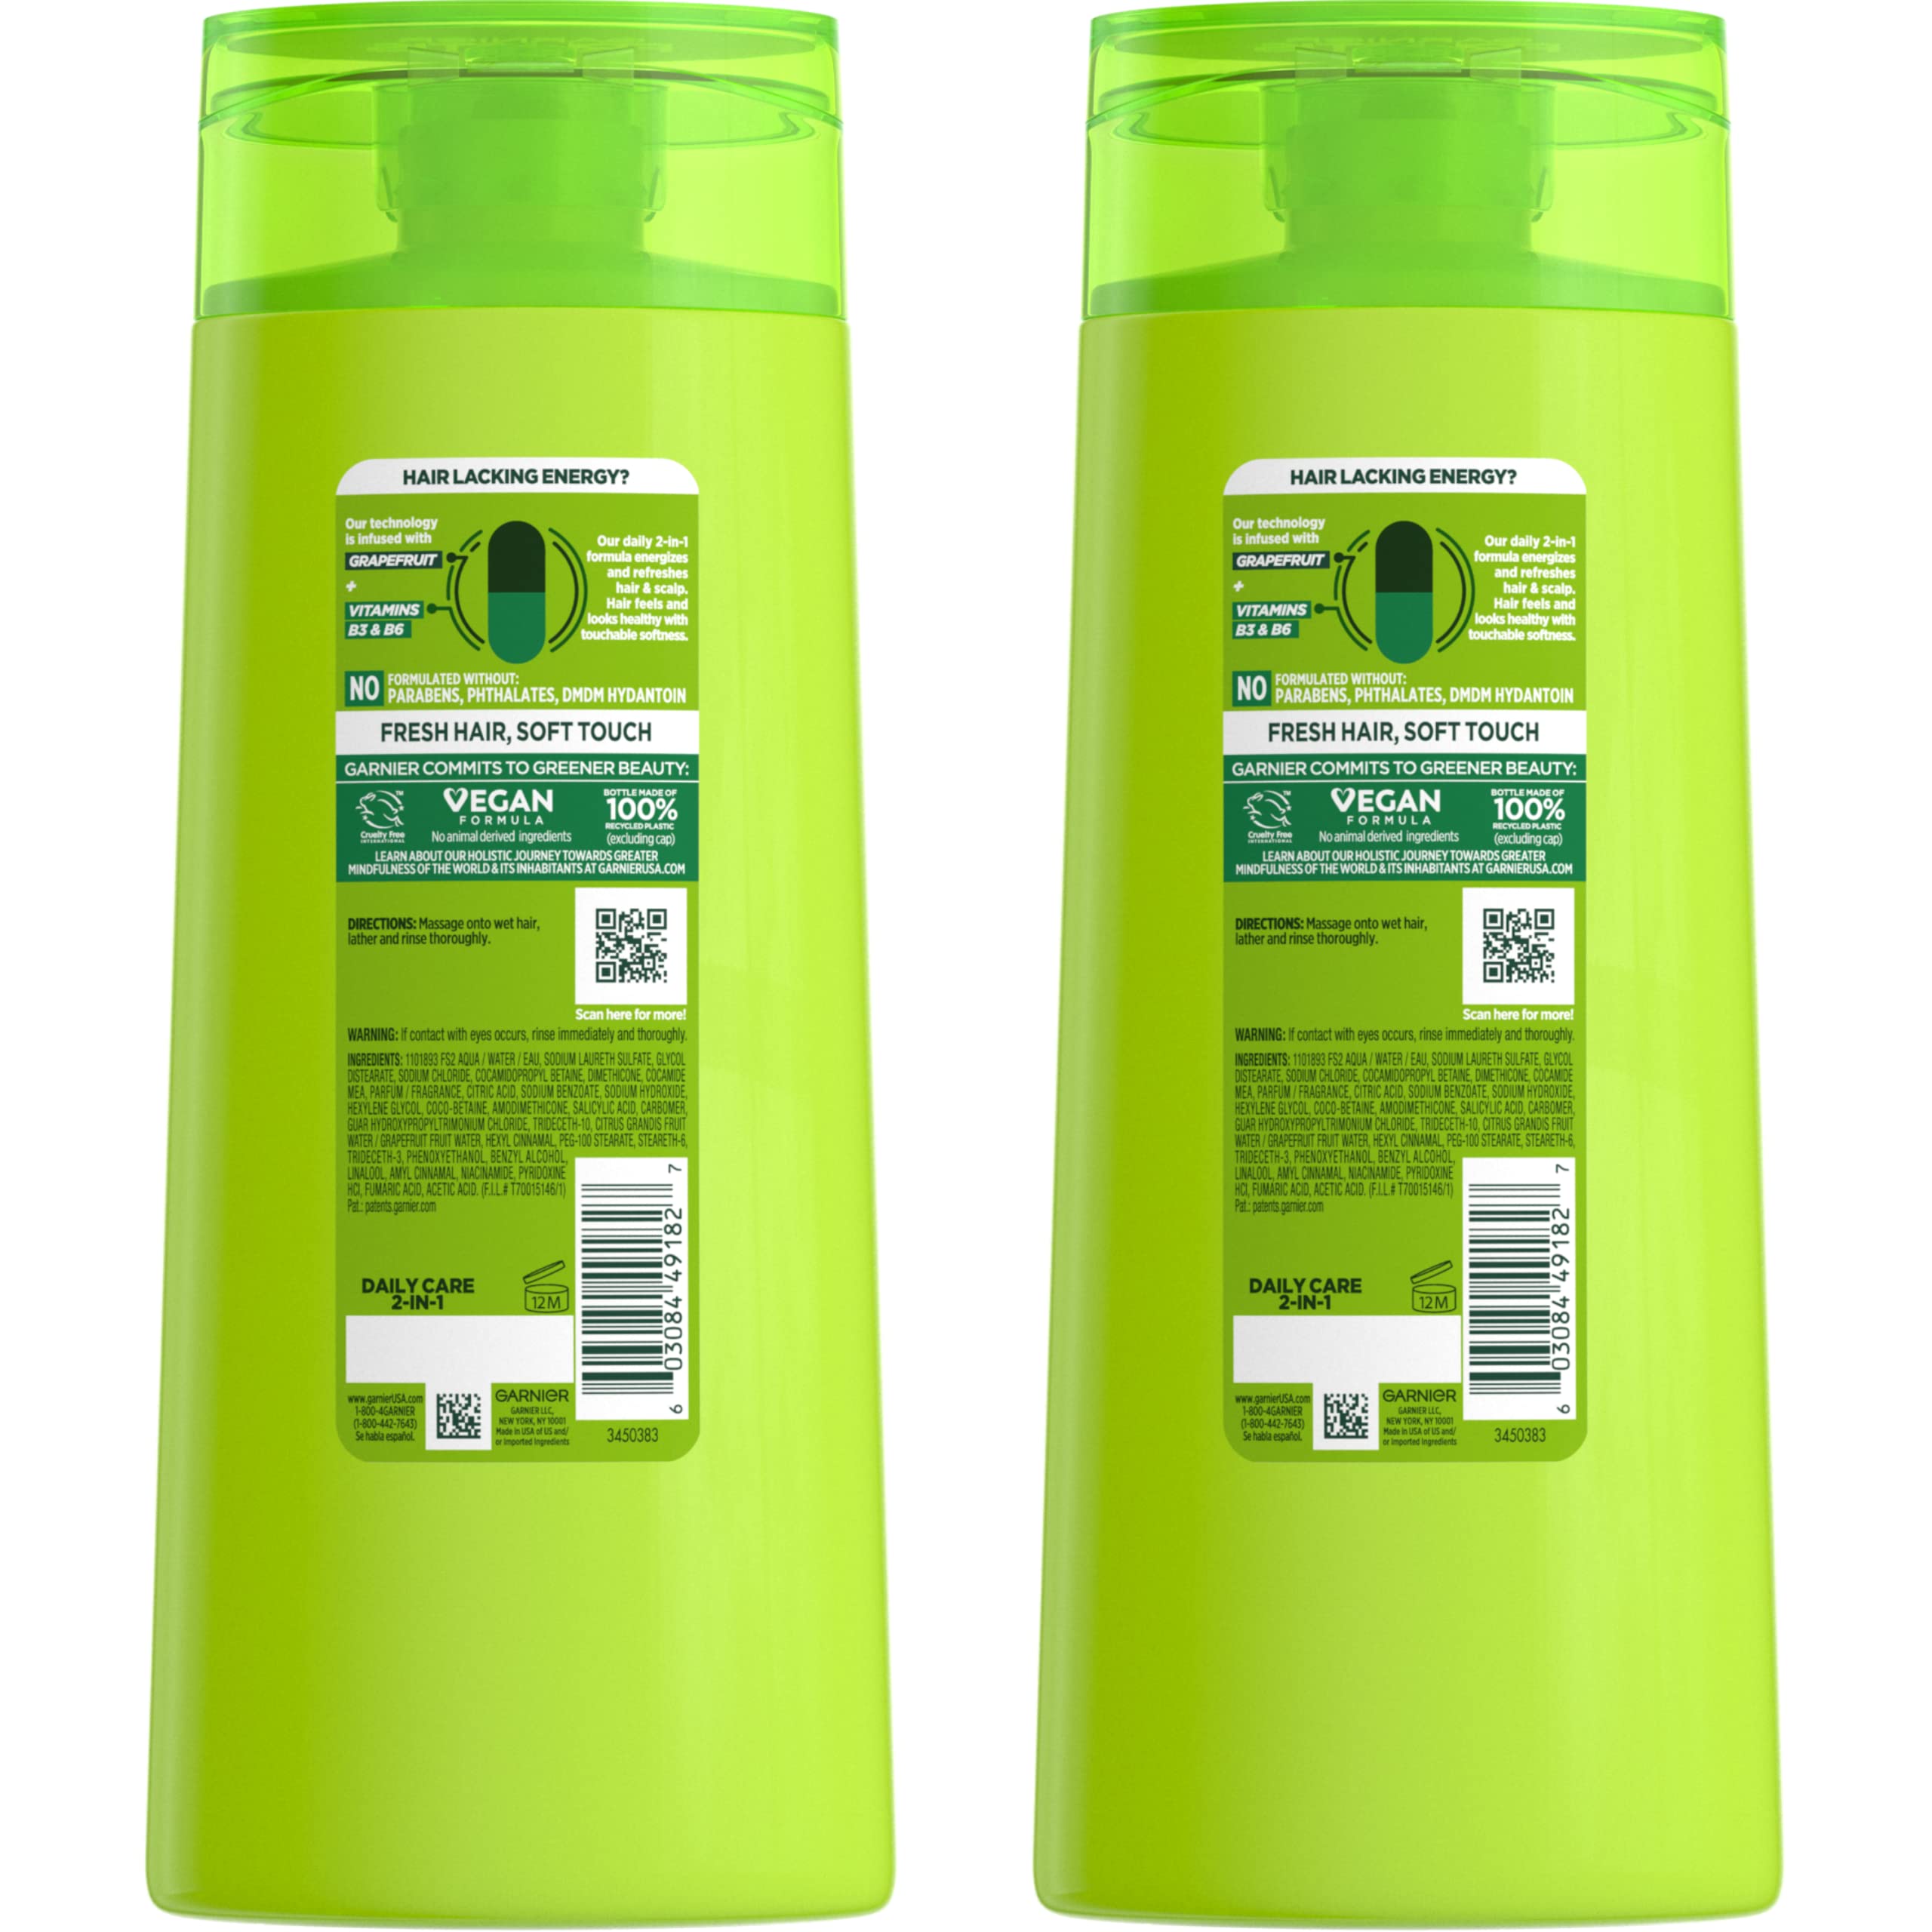 Garnier Fructis Daily Care 2-in-1 Energizing Shampoo + Conditioner, Vegan, 22 Fl Oz, 2 Count